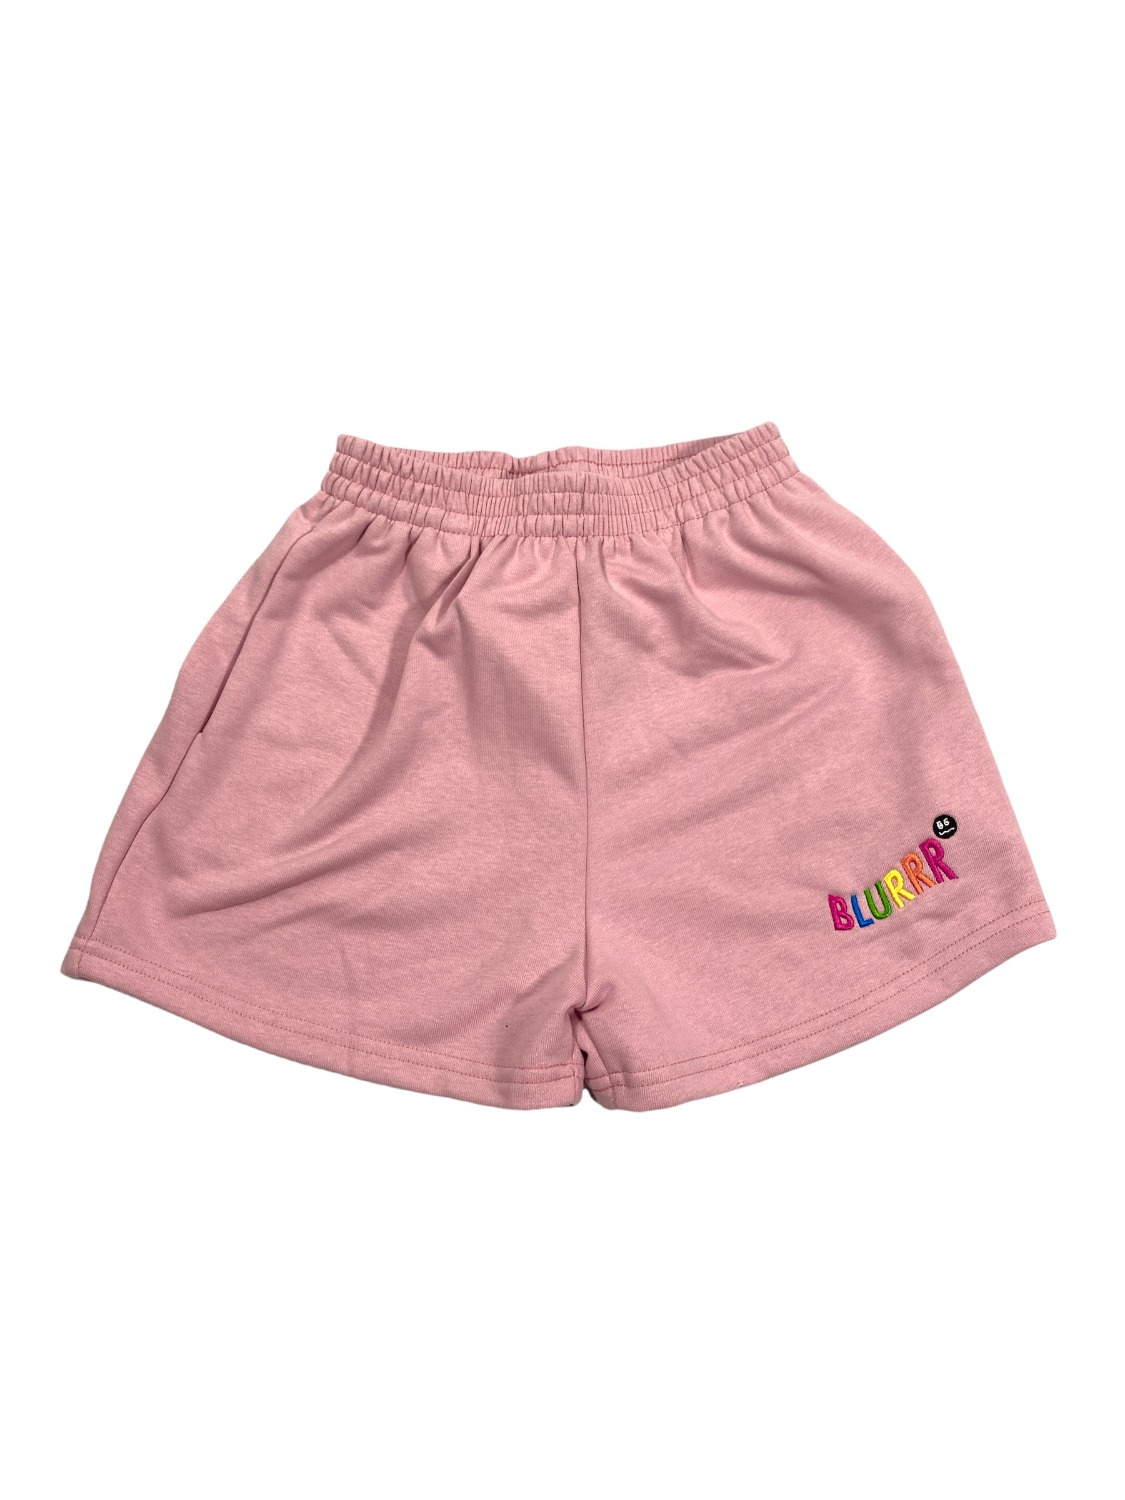 BLURRR Fluffy Shorts (Pink)